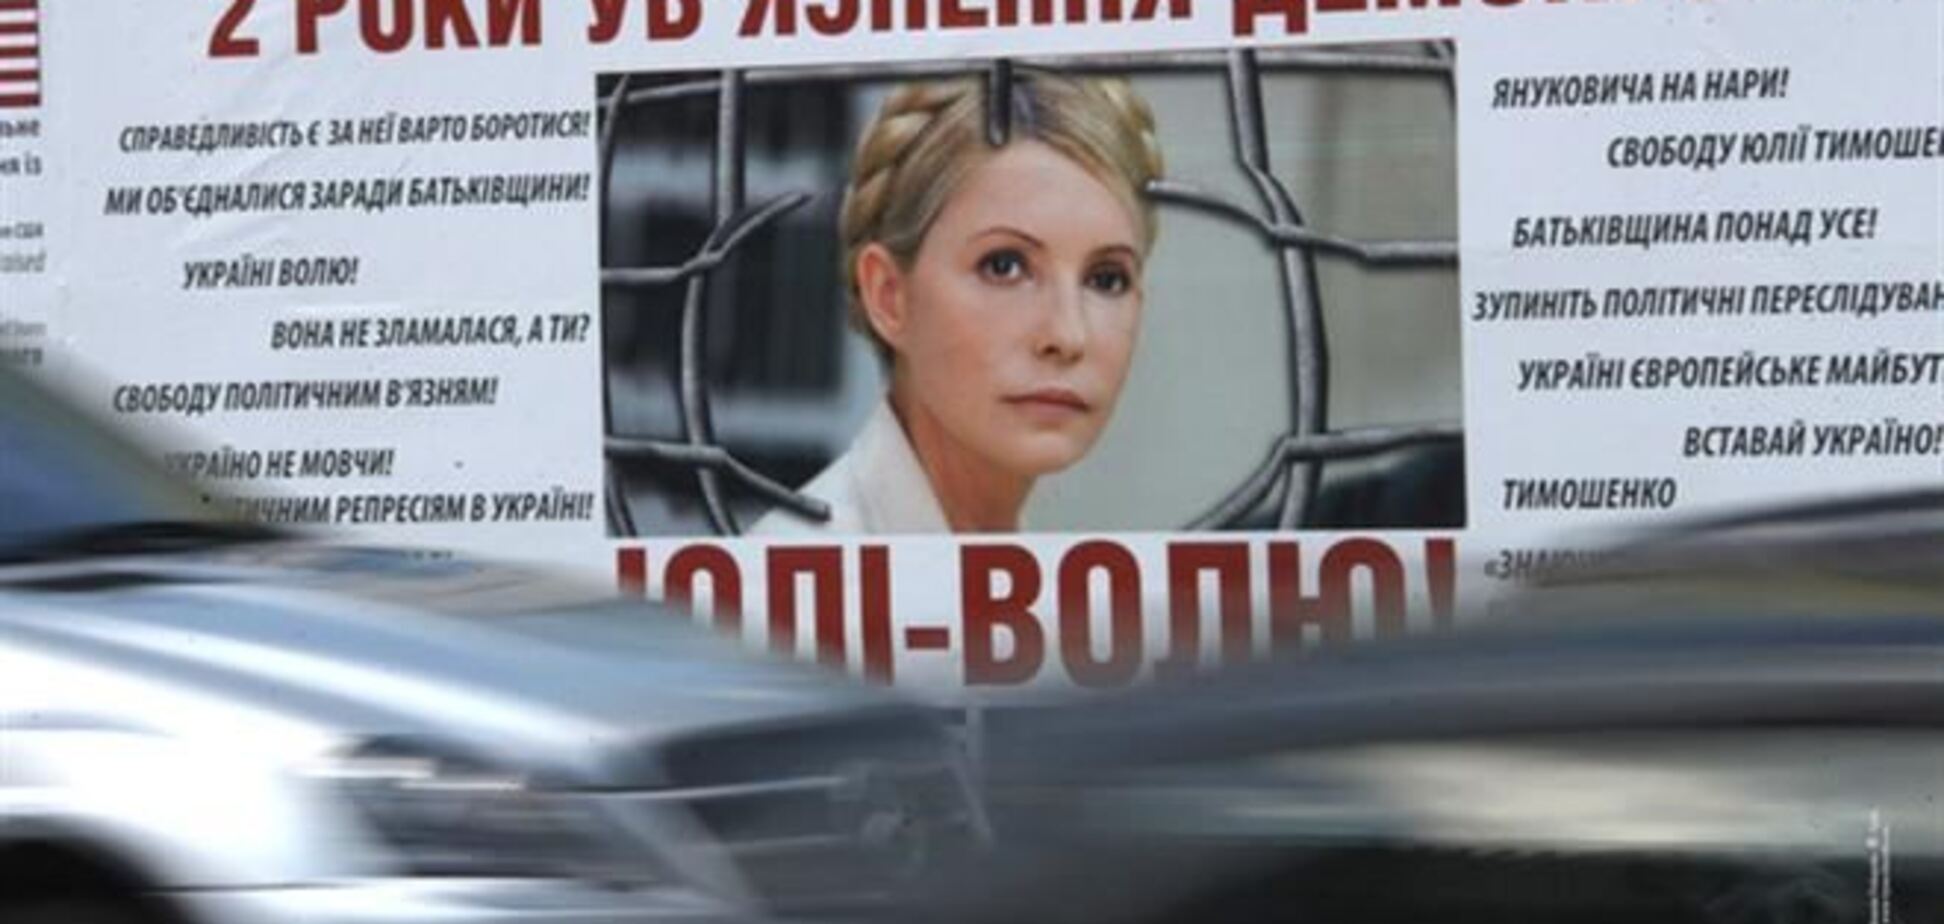 Тимошенко опровергла свою 'болезнь'